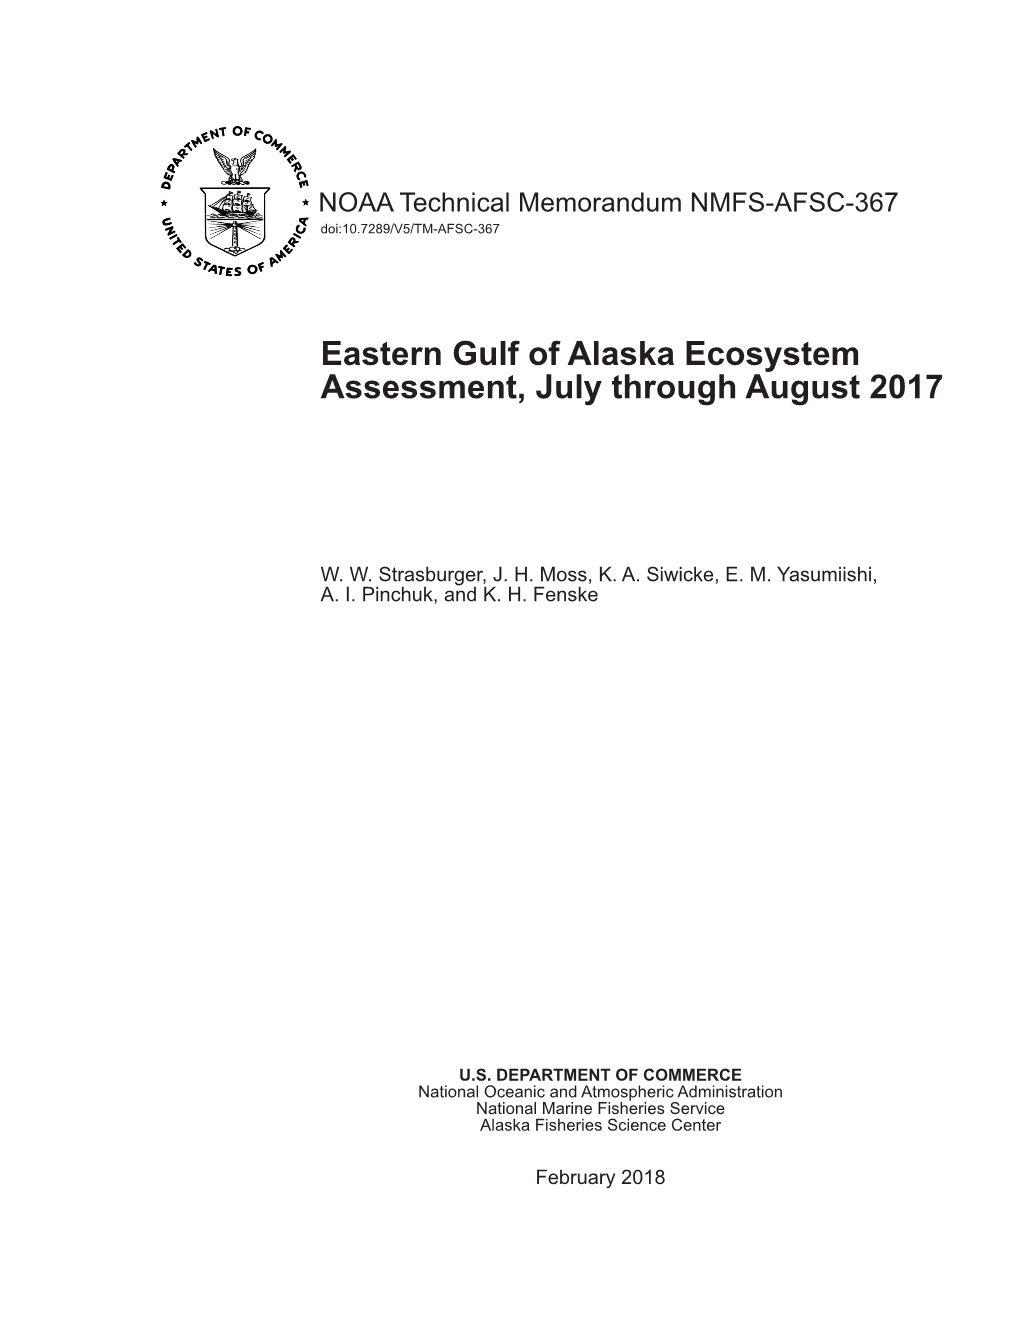 Eastern Gulf of Alaska Ecosystem Assessment, July Through August 2017